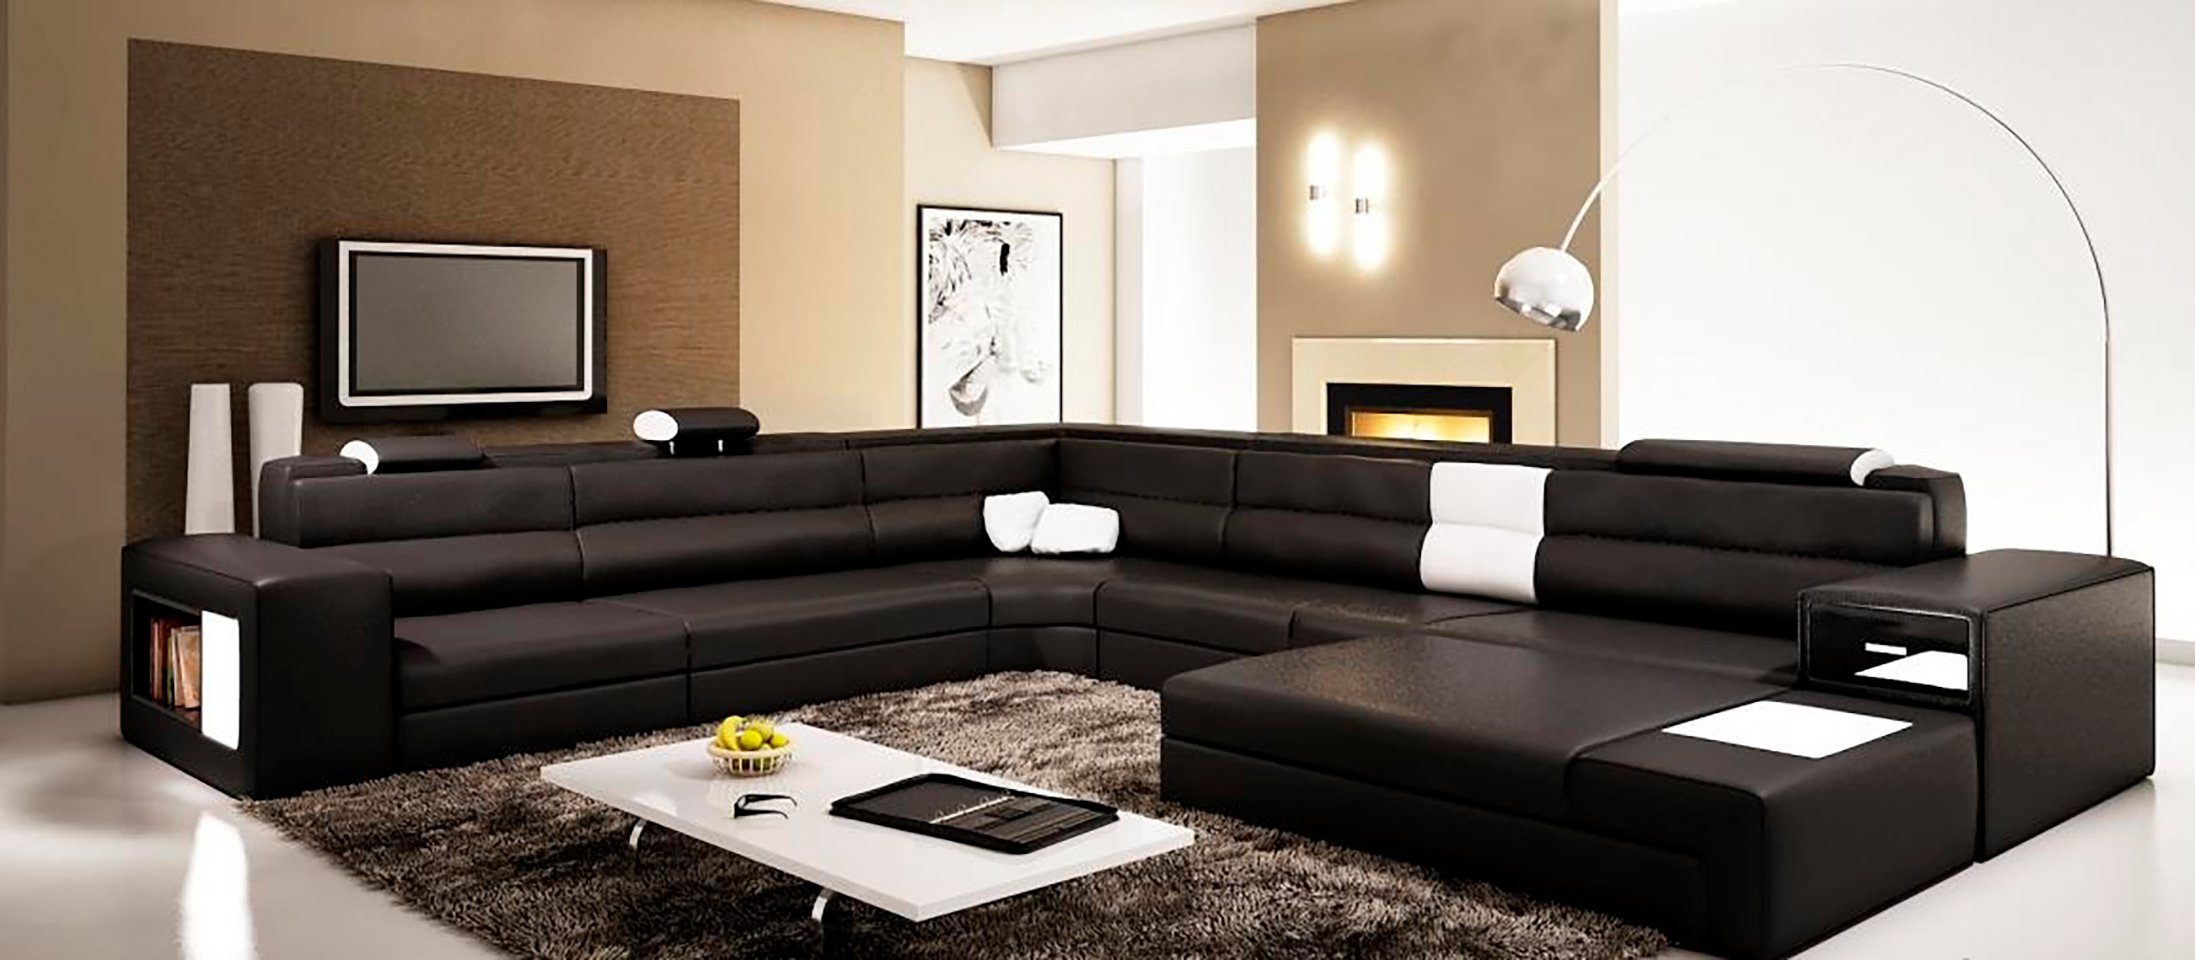 Textil Sofa Couch Polster Design Leder Landau Wohnlandschaft JVmoebel Ecksofa, Ecksofa